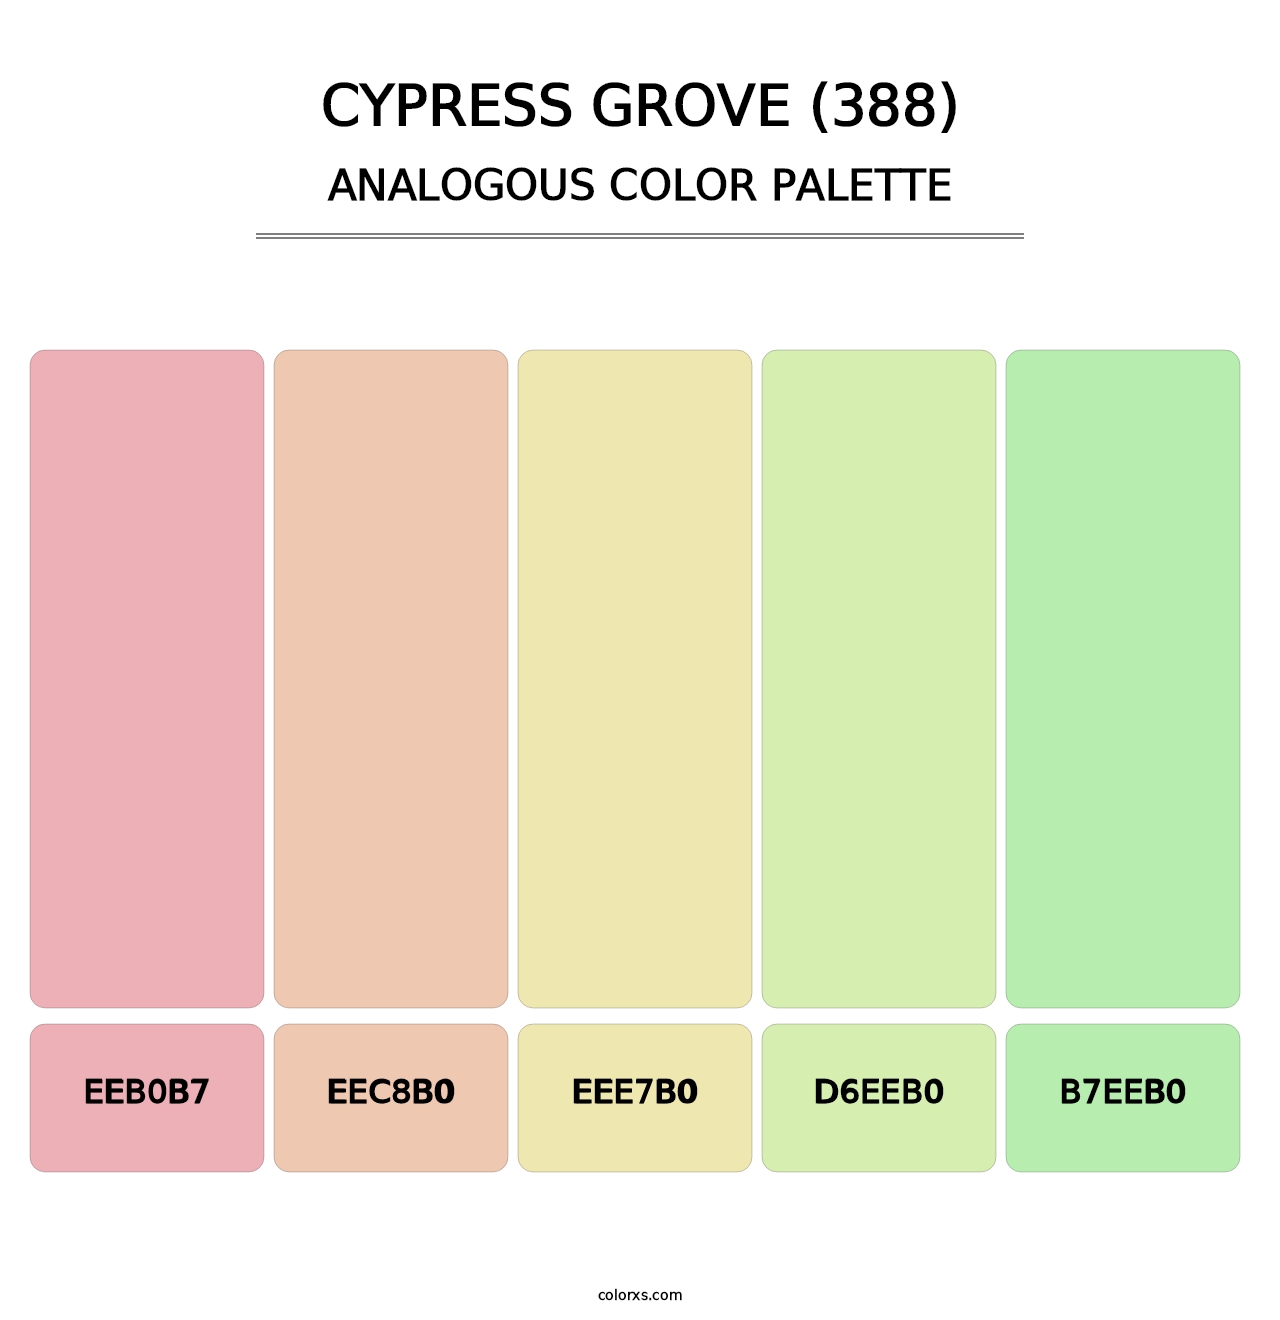 Cypress Grove (388) - Analogous Color Palette